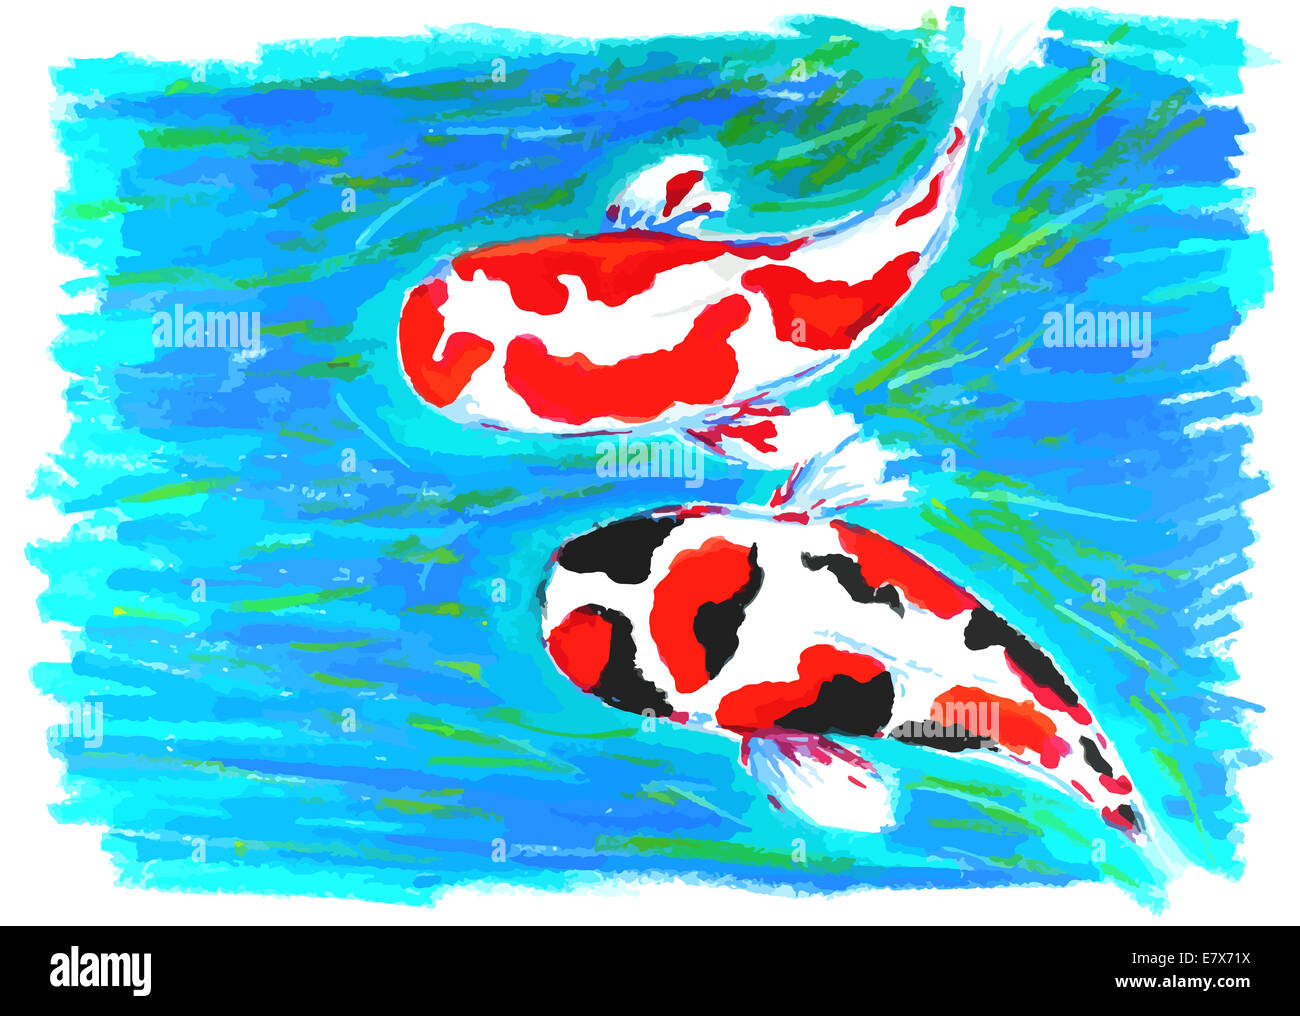 koi fish swiming in water painting background Stock Photo